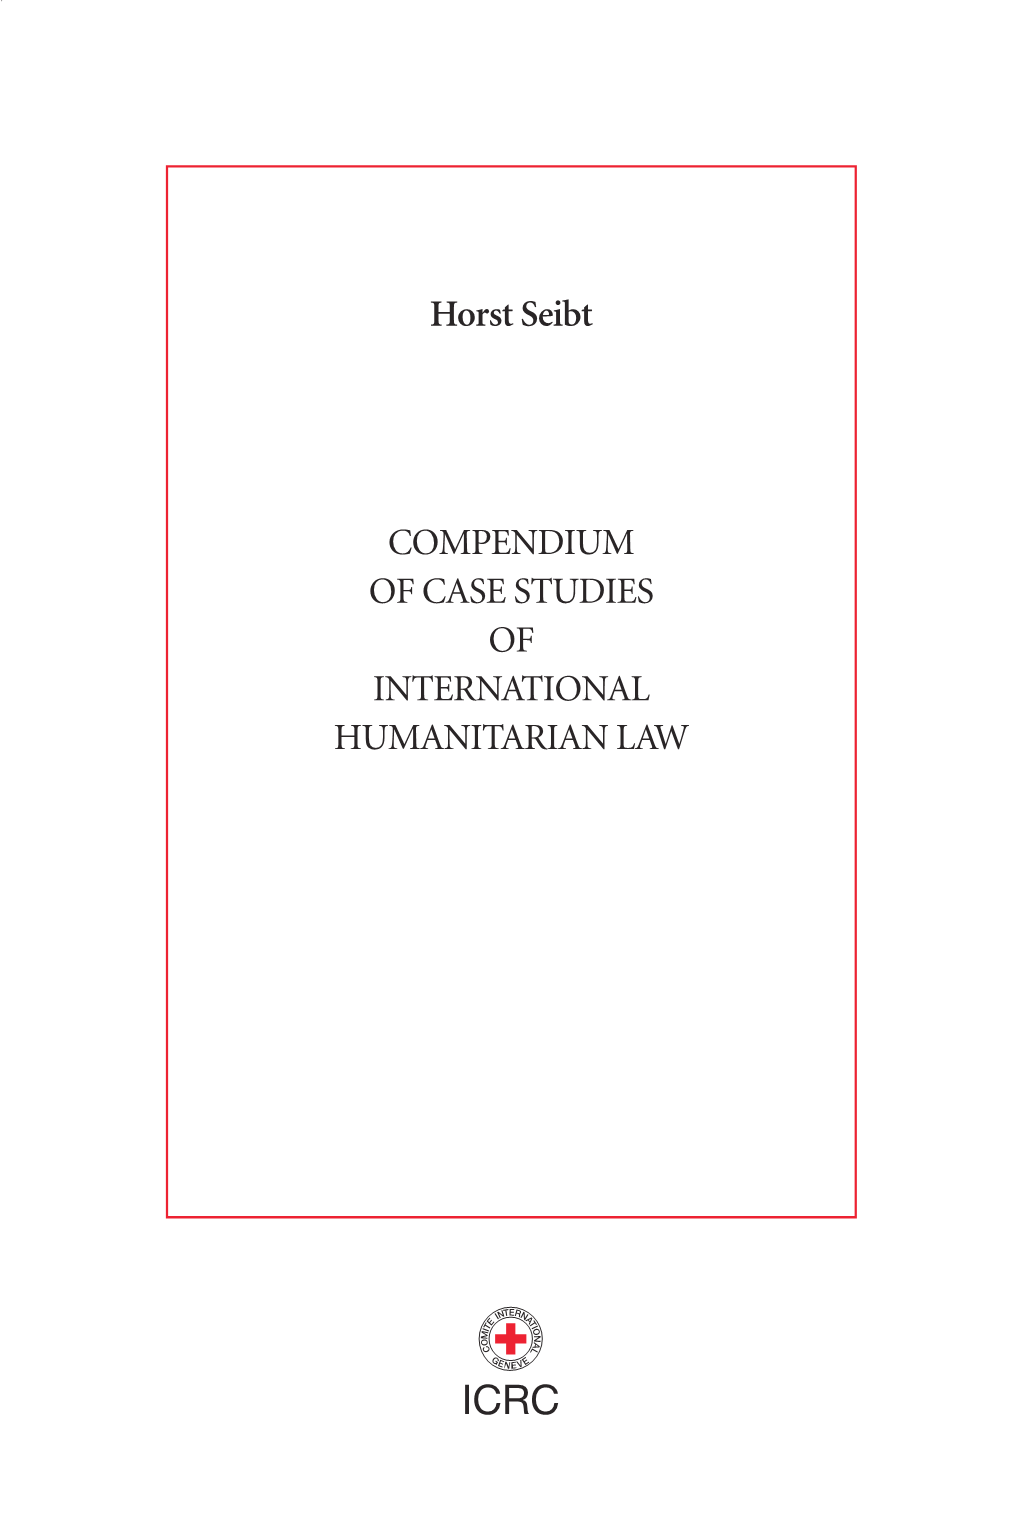 Compendium of Case Studies of International Humanitarian Law Icrc 0517/002 04.2005 500